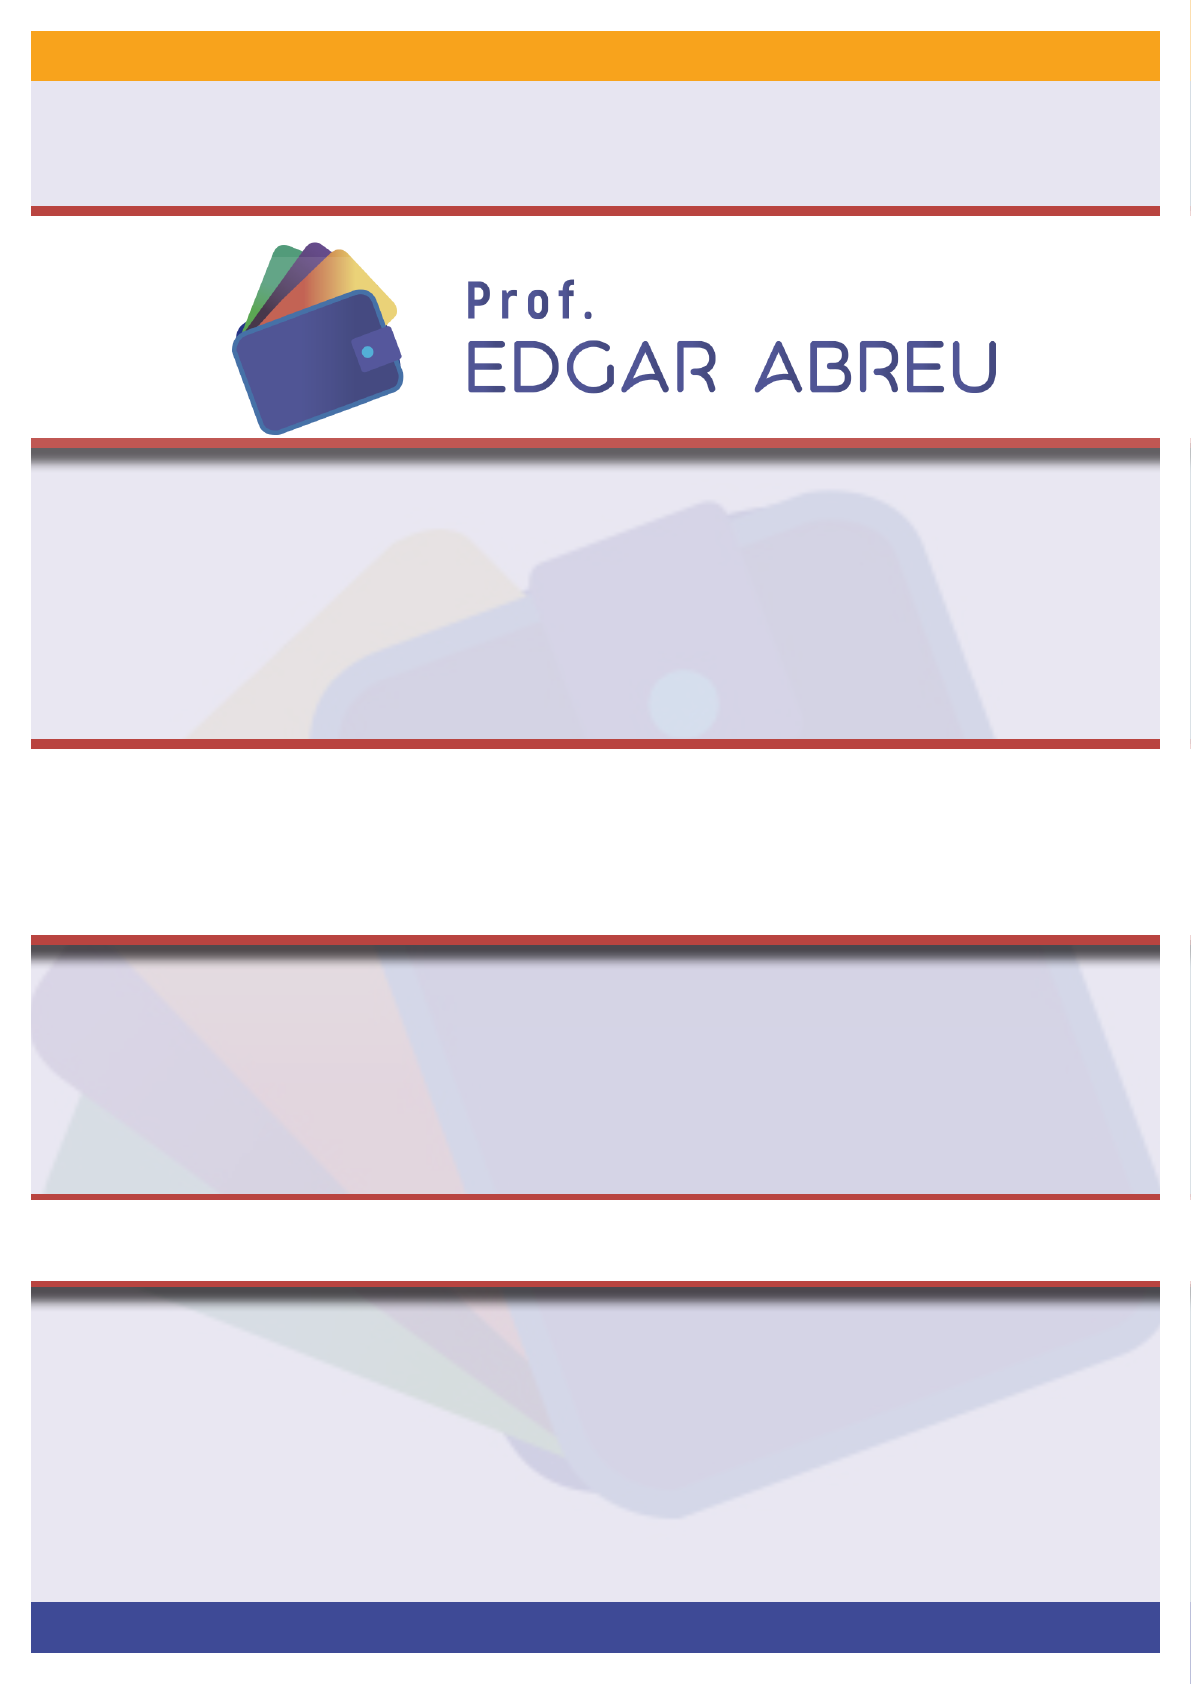 CPA 10 - Edgar Abreu, PDF, Bolsa de valores